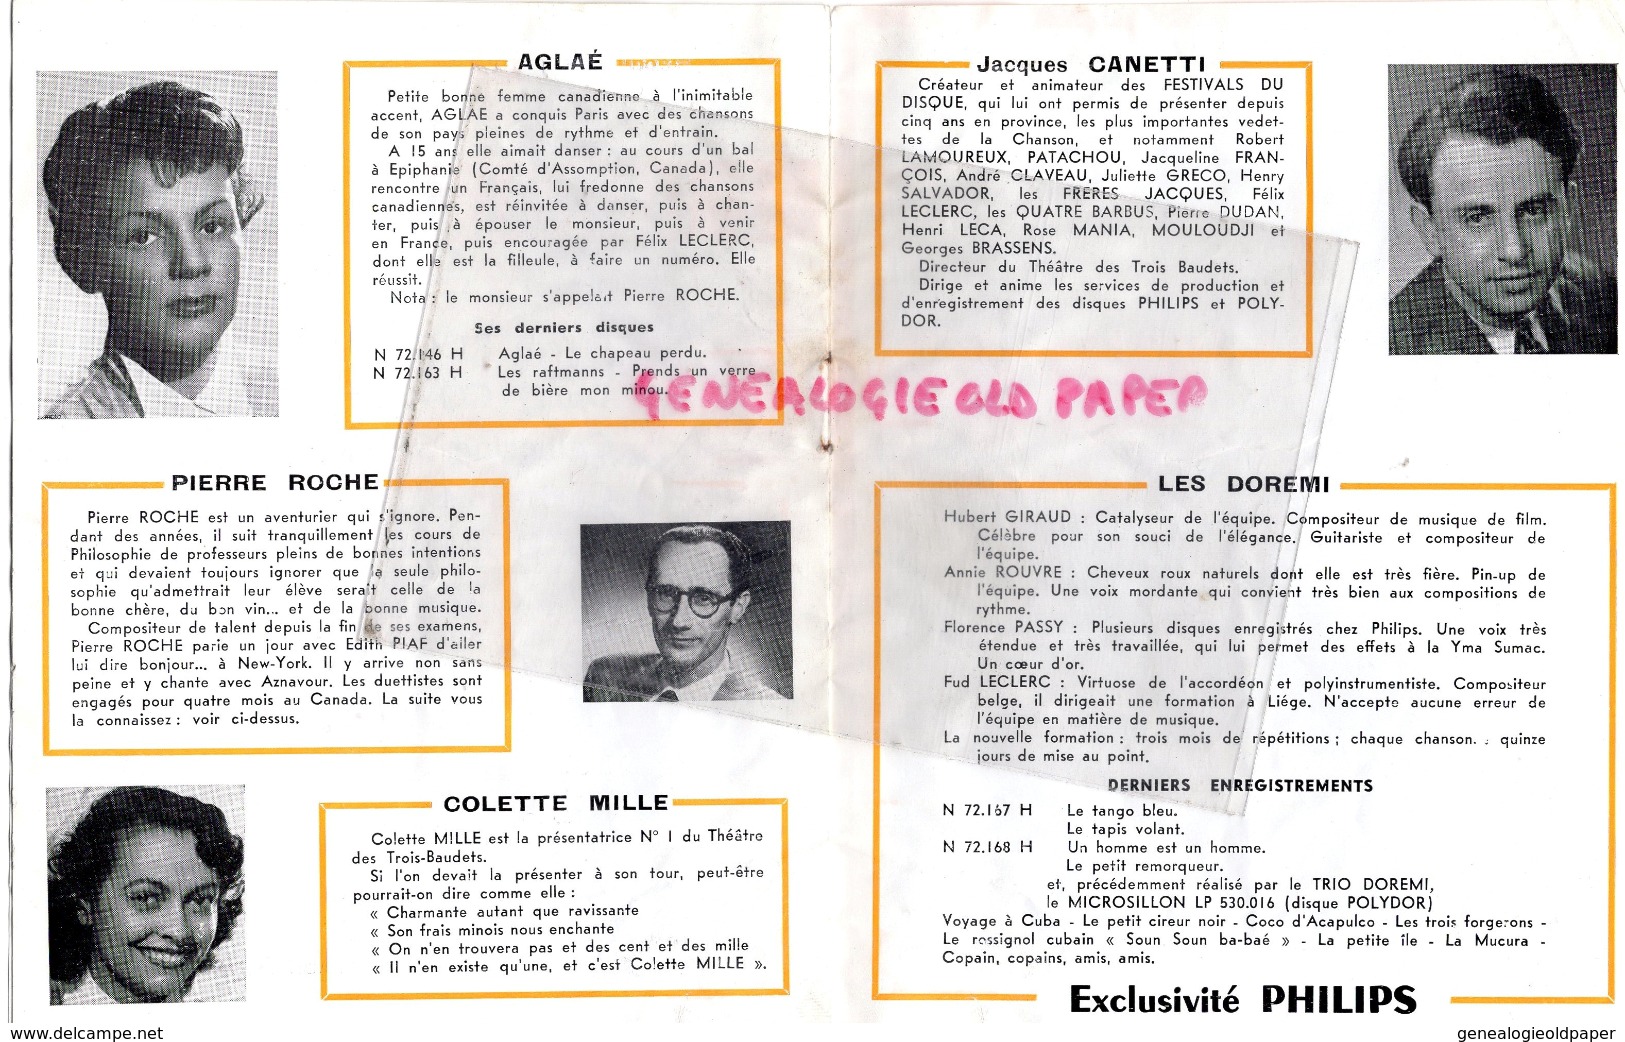 PROGRAMME JACQUES CANETTI- 2EME FESTIVAL DU DISQUE 1953- AGLAE- PIERRE JEAN VAILLARD-MOULOUDJI-DARRY COWL-PIERRE ROCHE- - Programme